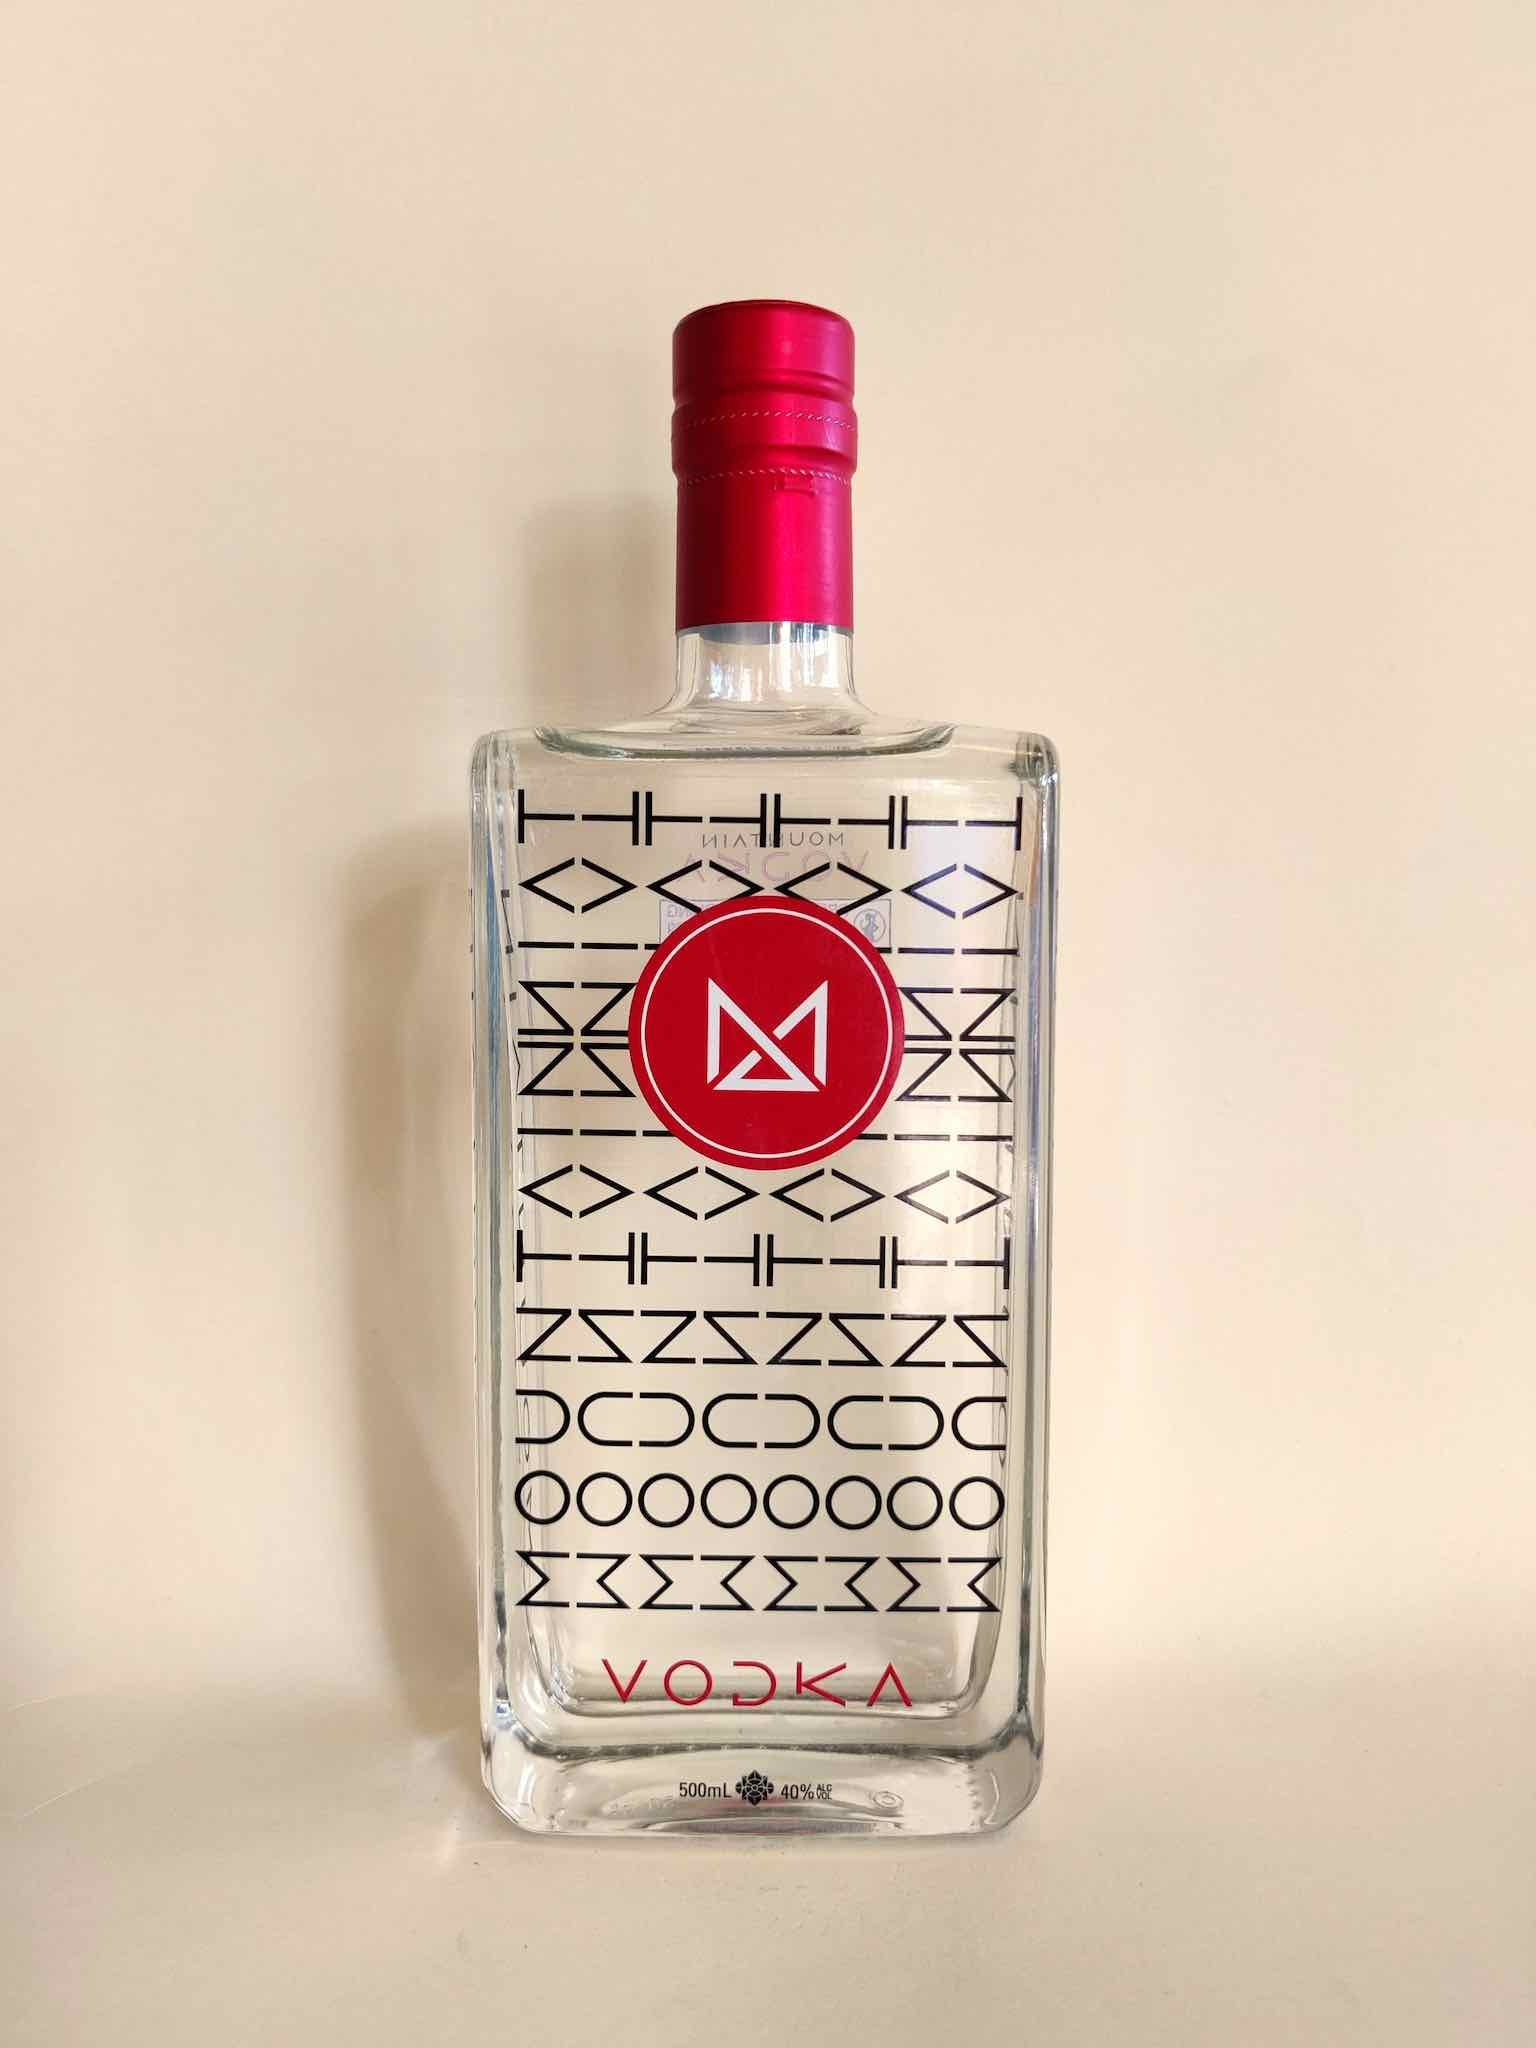 A 500ml bottle of Mountain Distilling Australian Vodka from the Macedon Ranges, Victoria.